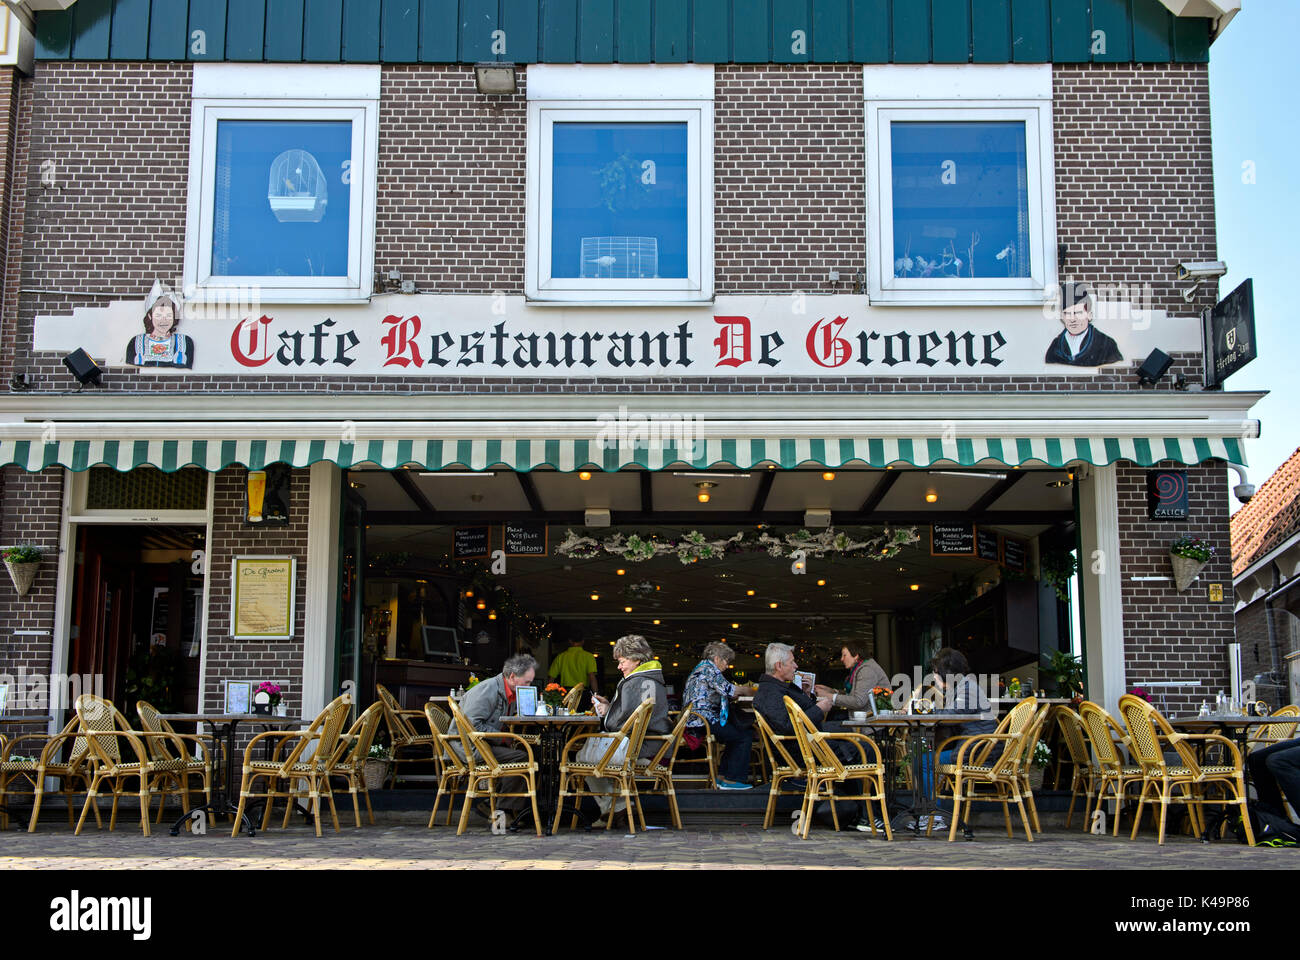 Restauran De Groene At The Harbor Promendade, Volendamm, North Holland, Netherlands Stock Photo